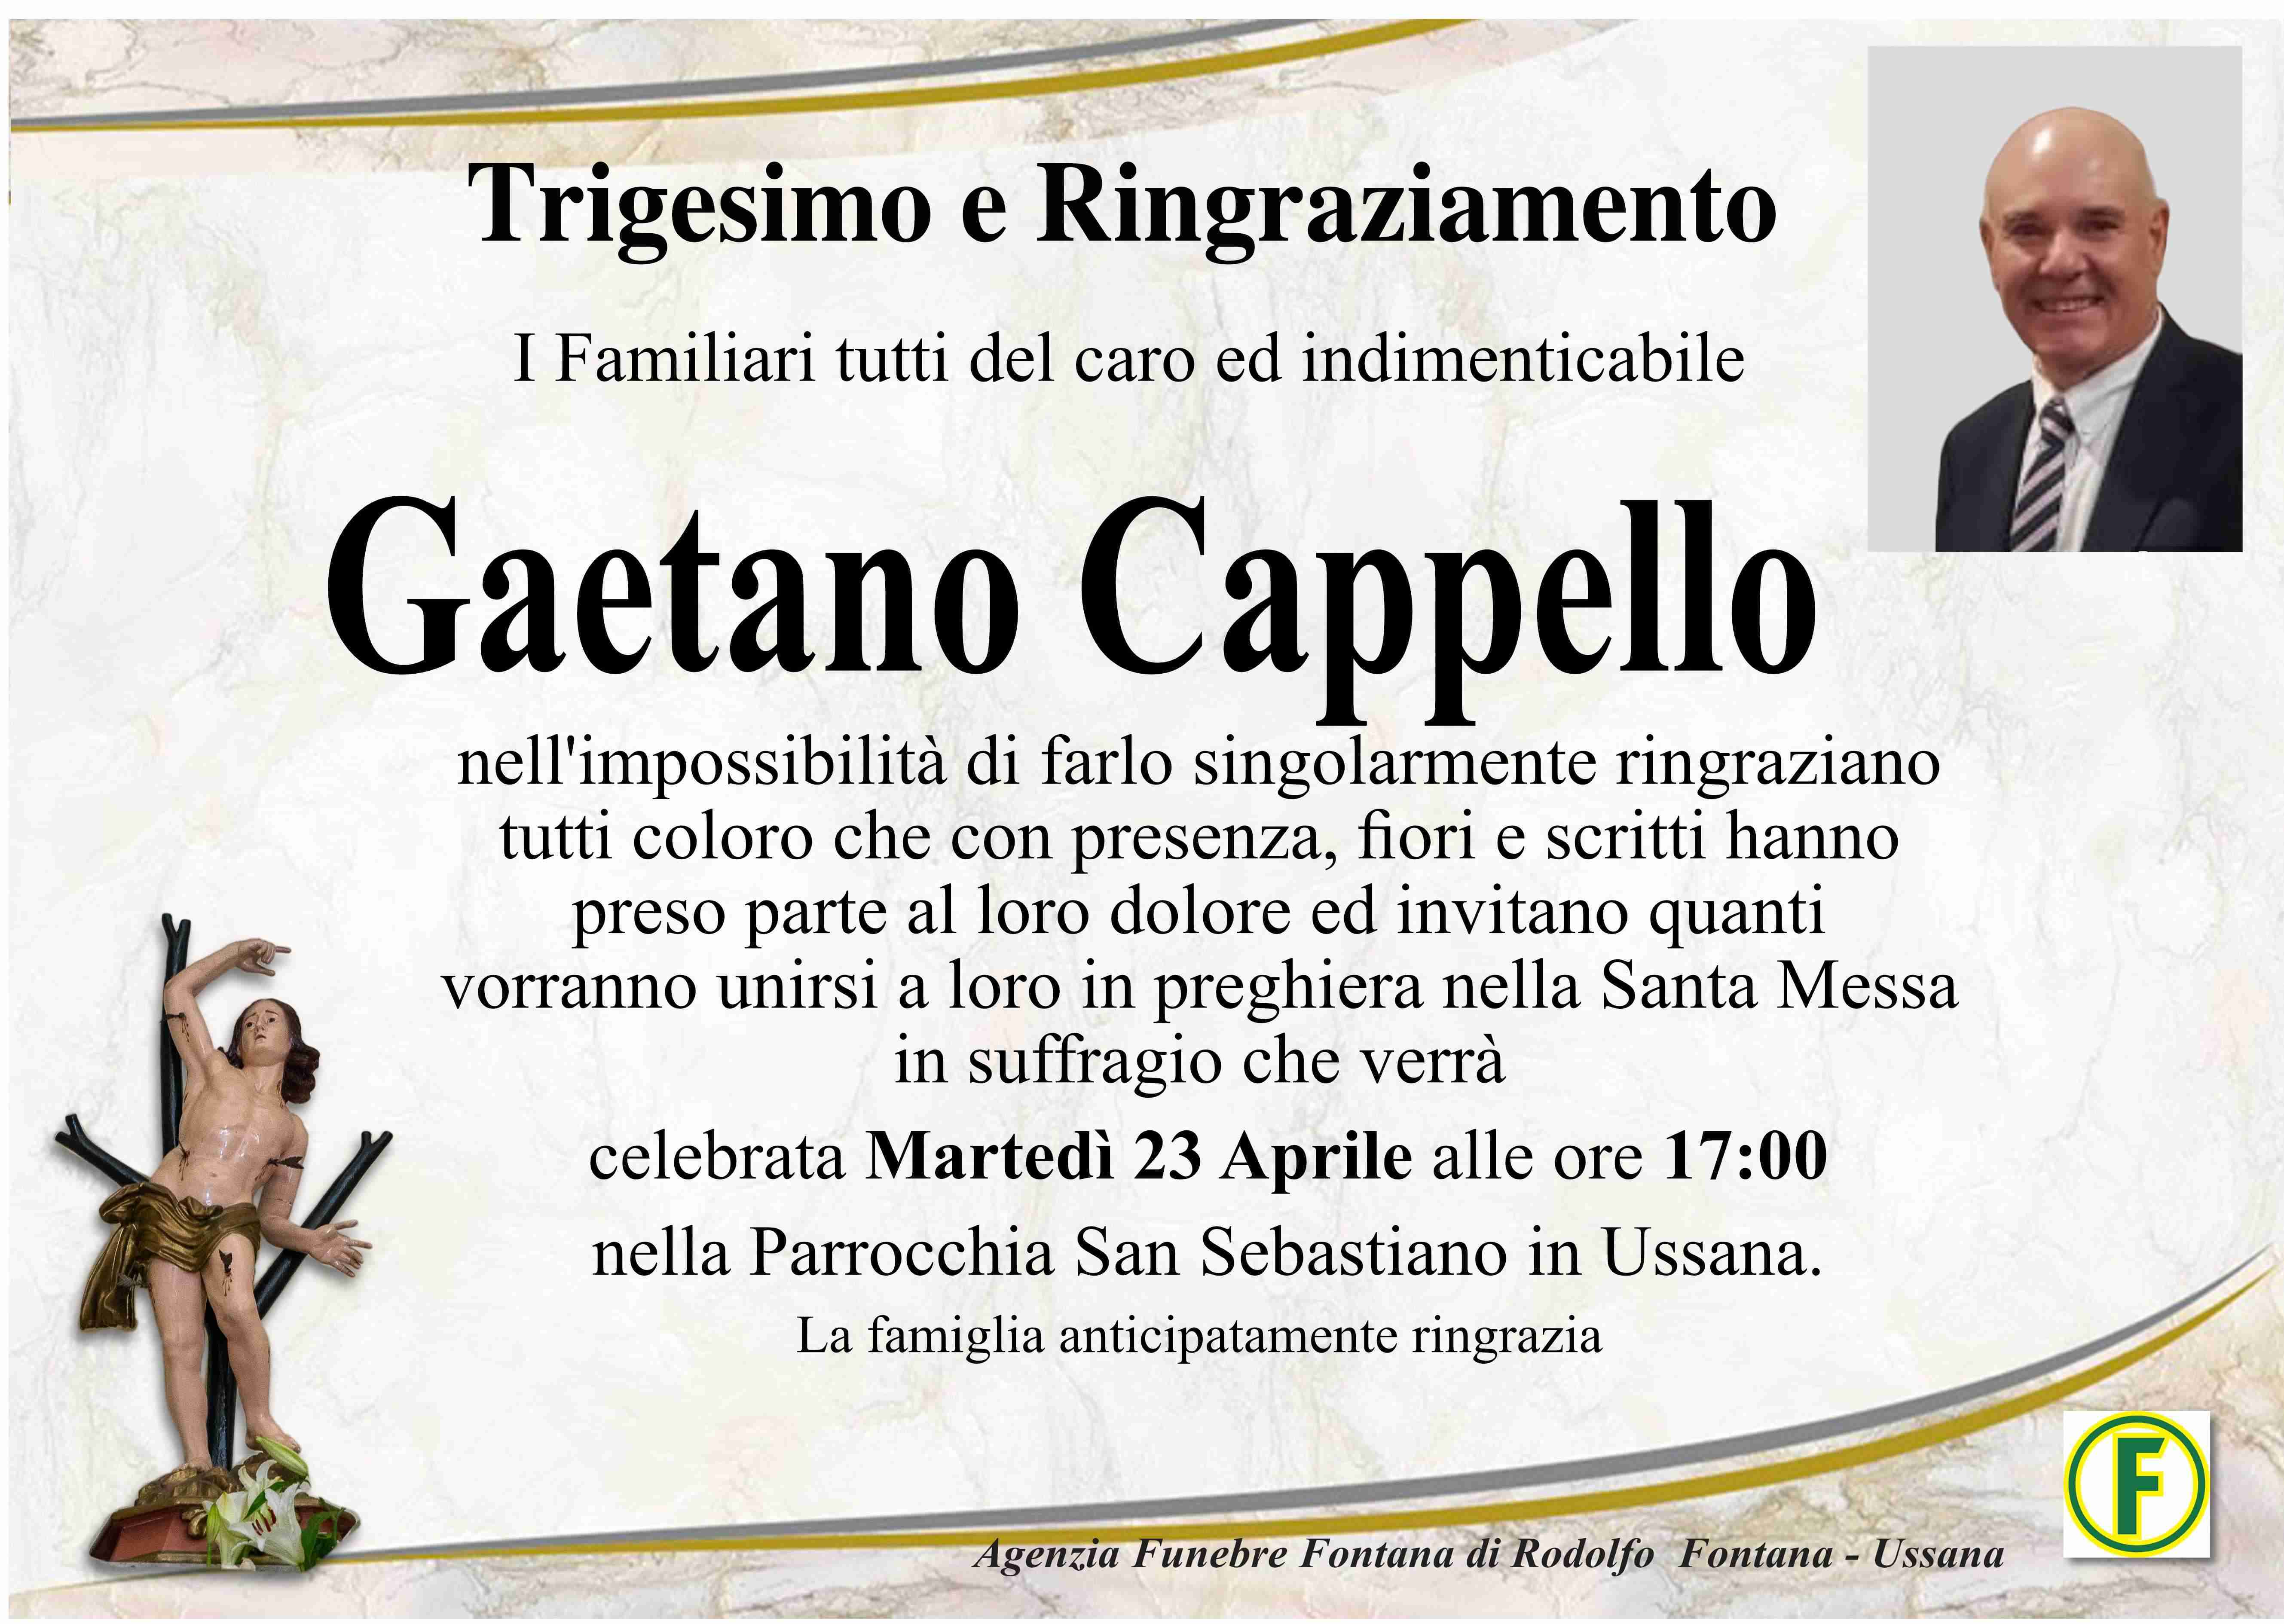 Gaetano Cappello